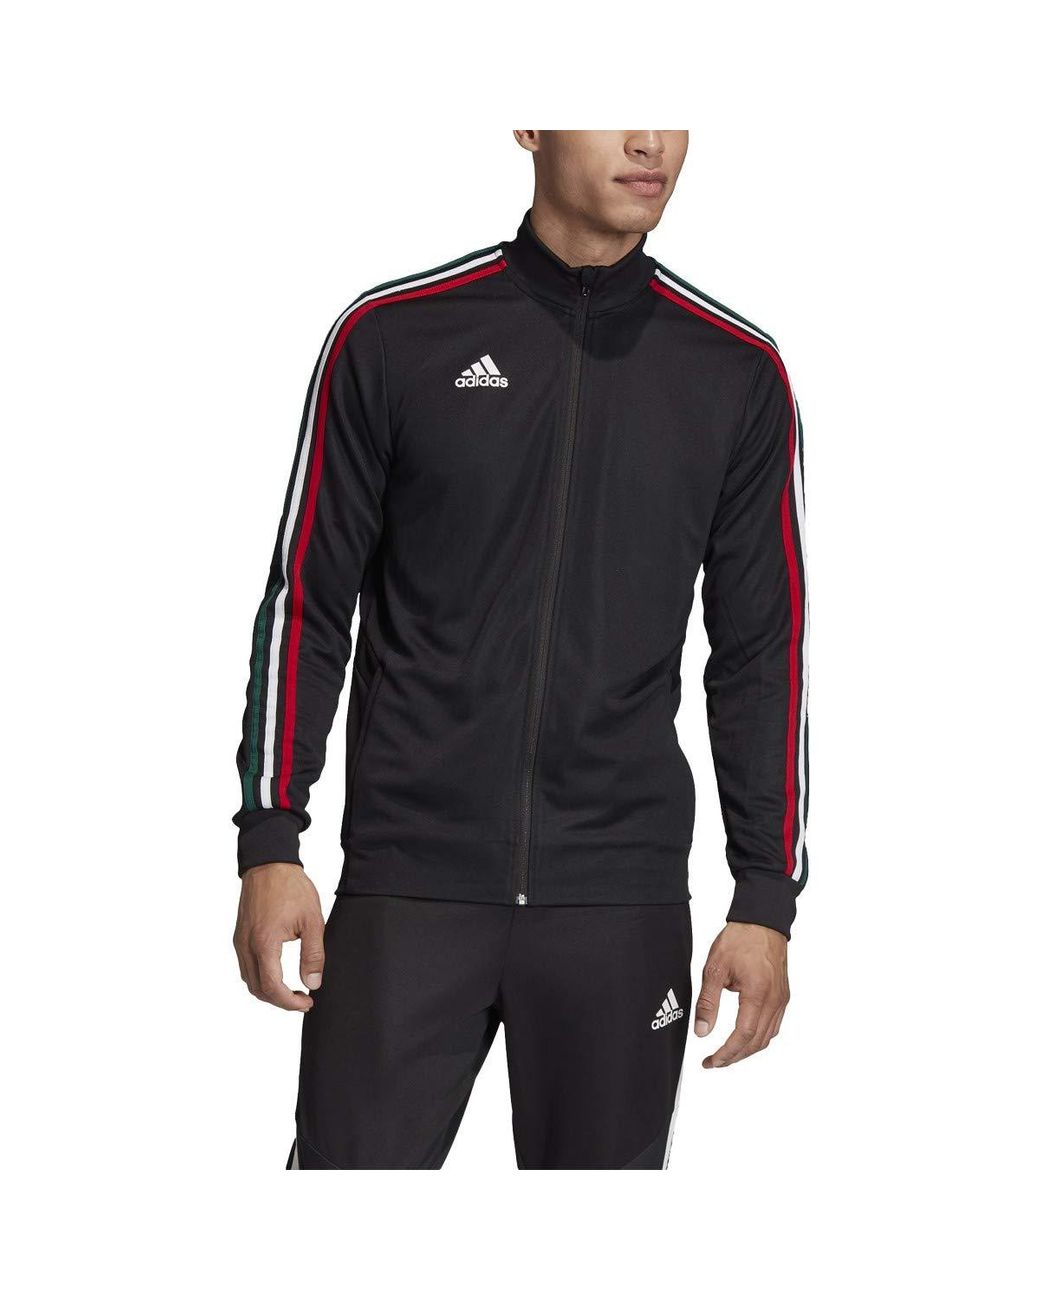 Adidas Men's Practice Black/White Football Jersey L